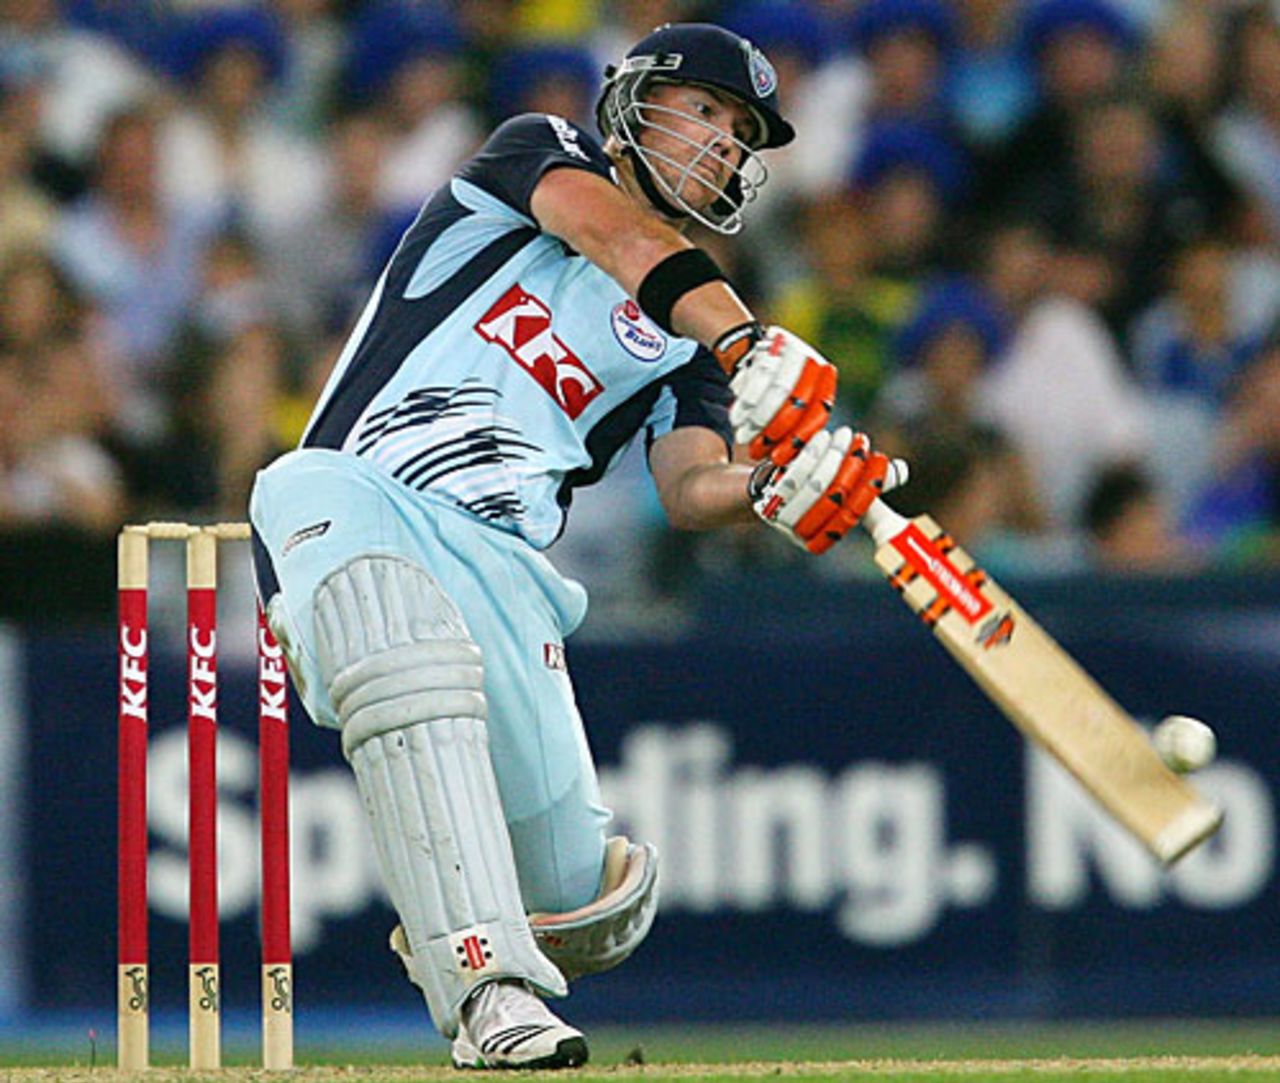 David Warner cuts loose, New South Wales v South Australia, Twenty20 Big Bash, Sydney, January 17, 2010 